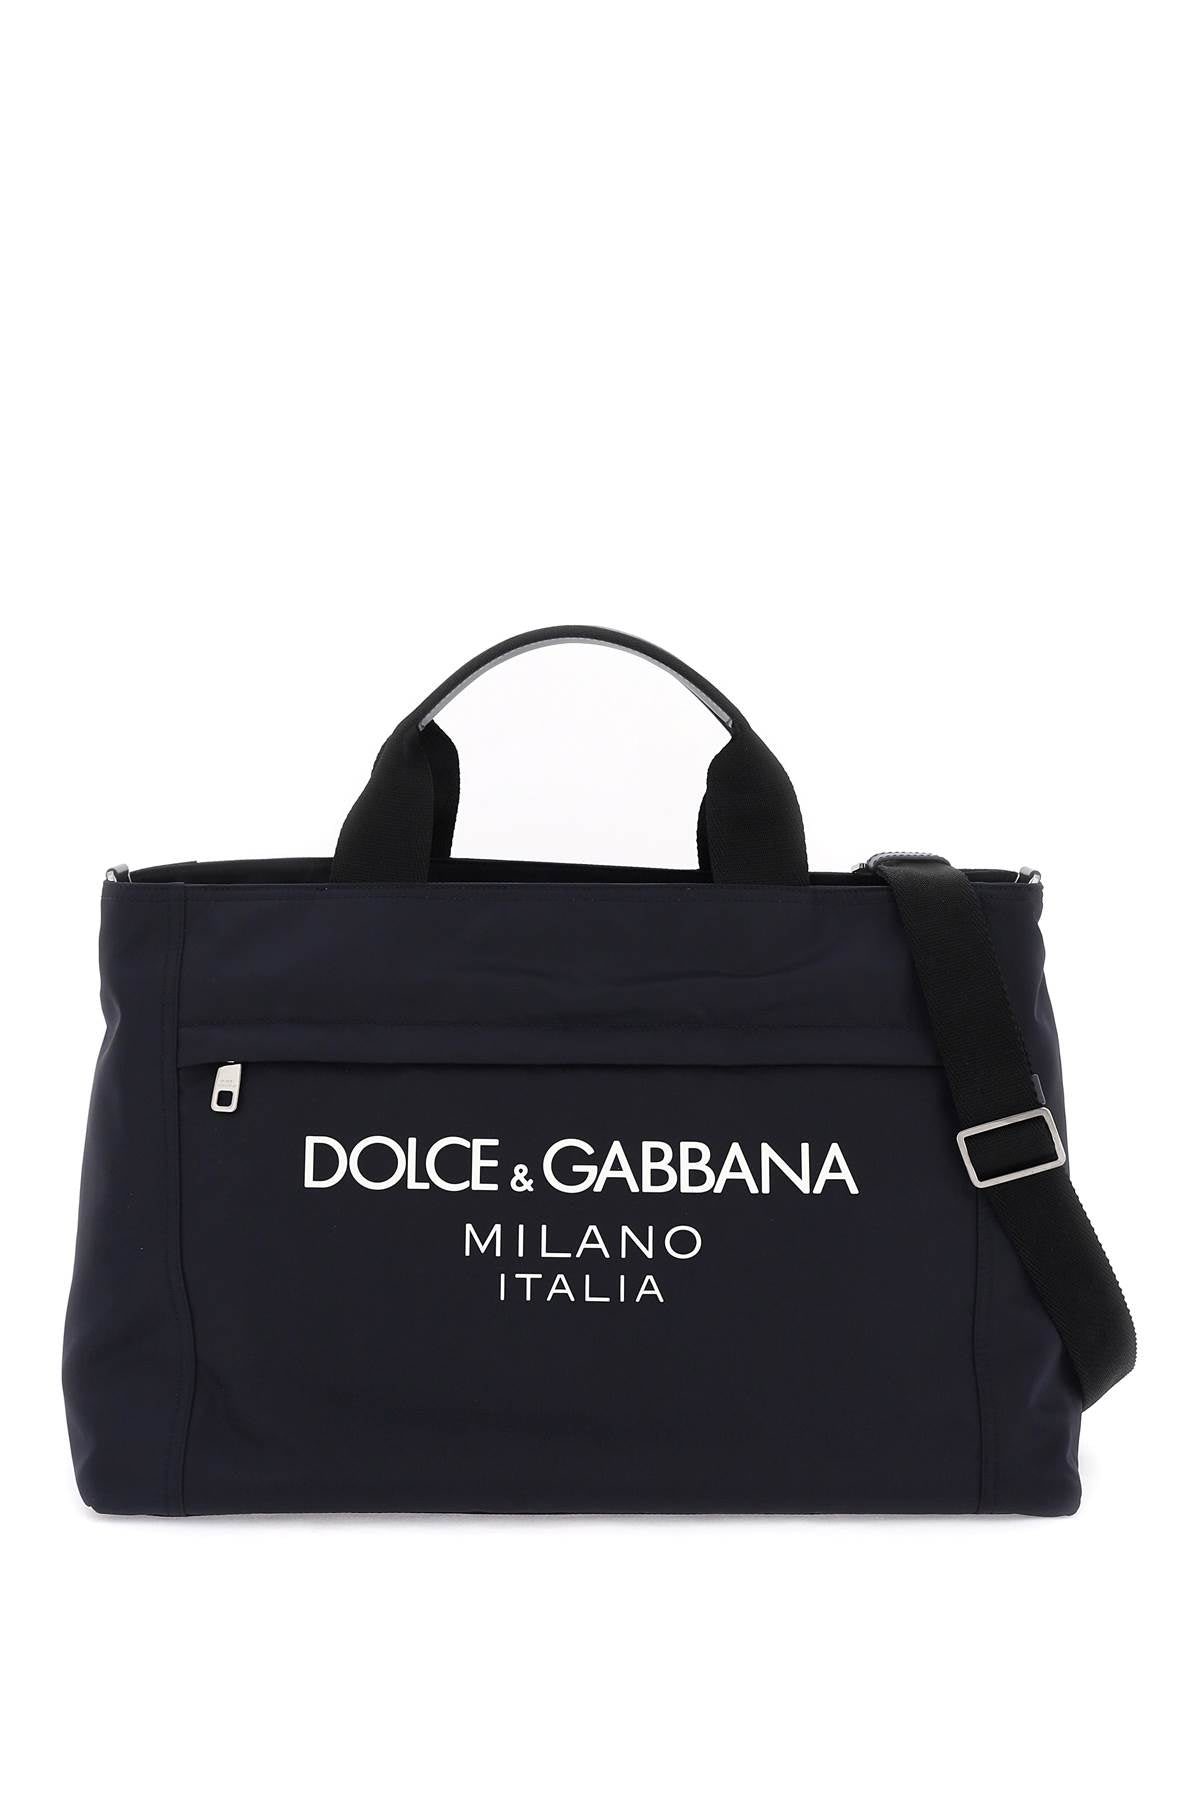 Dolce & gabbana rubberized logo nylon duffle bag-0